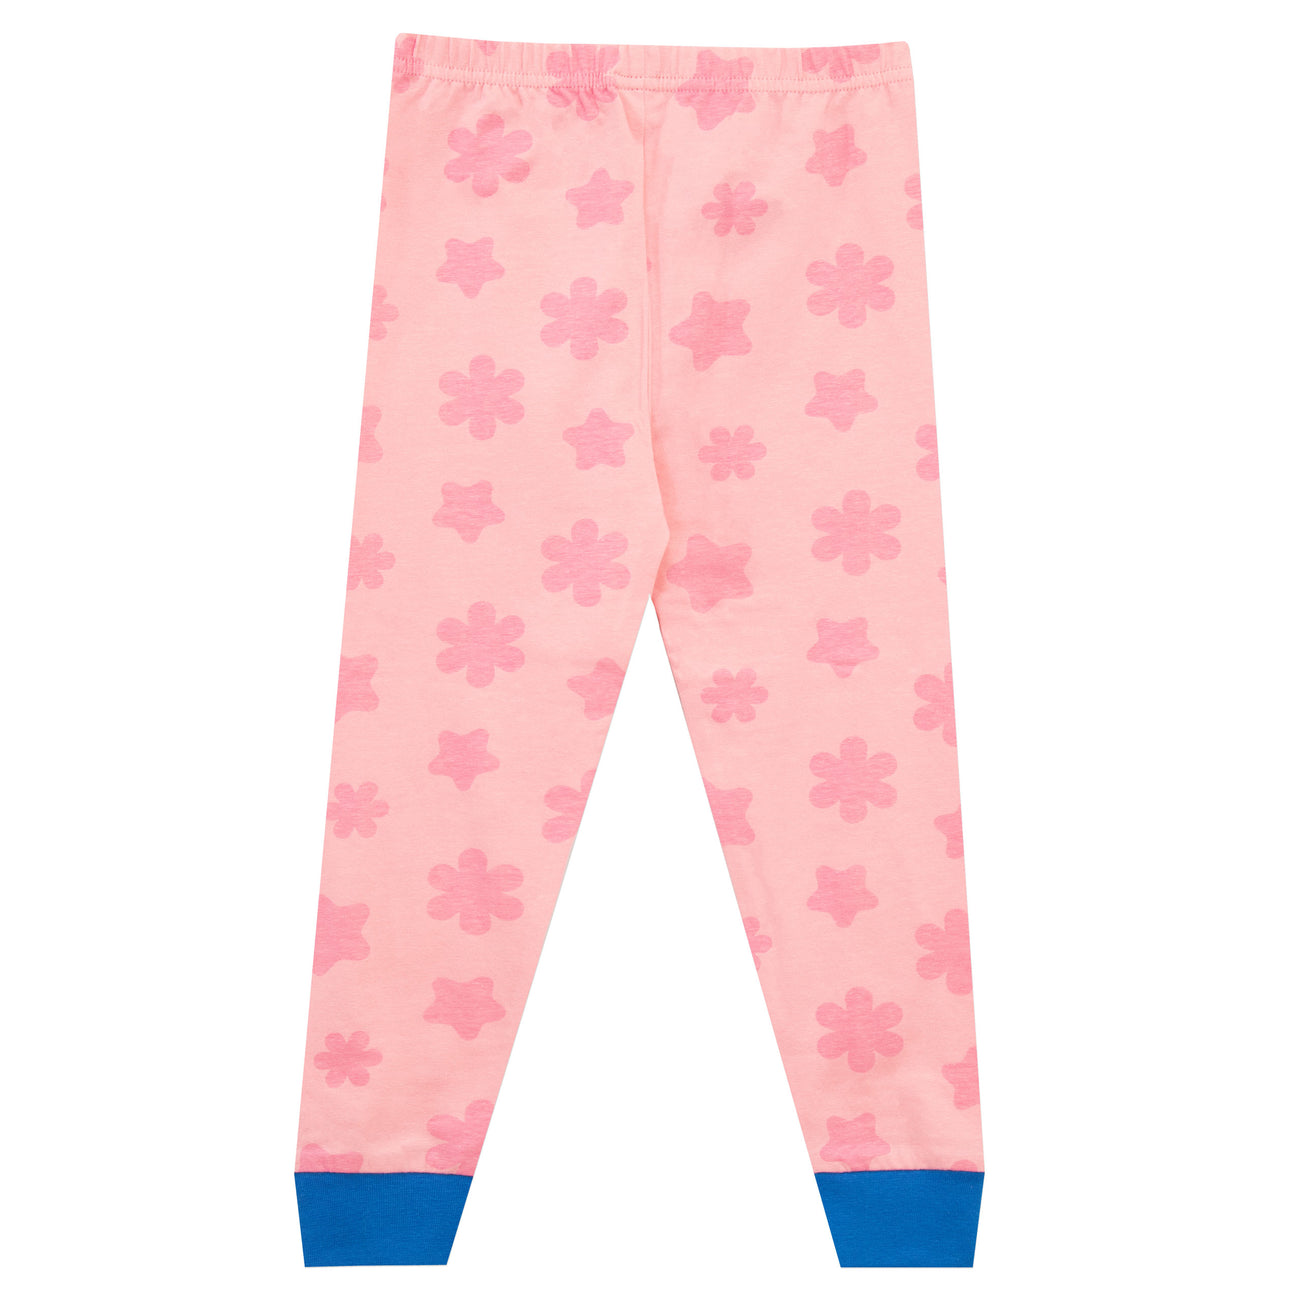 Buy Blues Clues Pajama Set | Kids | Character.com Official Merchandise